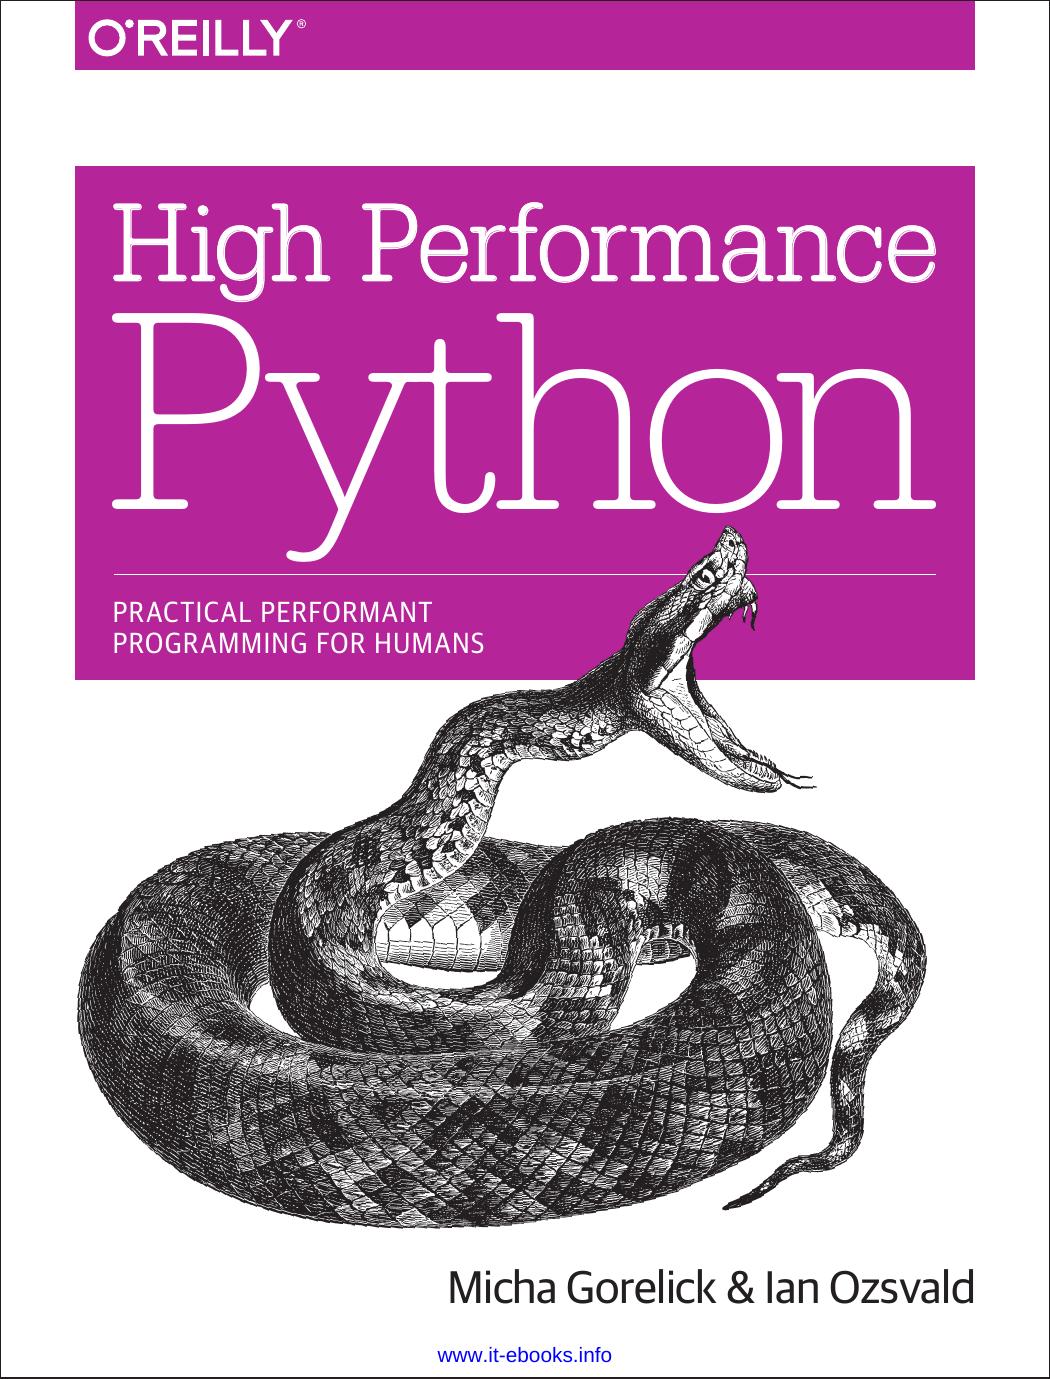 High Performance Python by Micha Gorelick